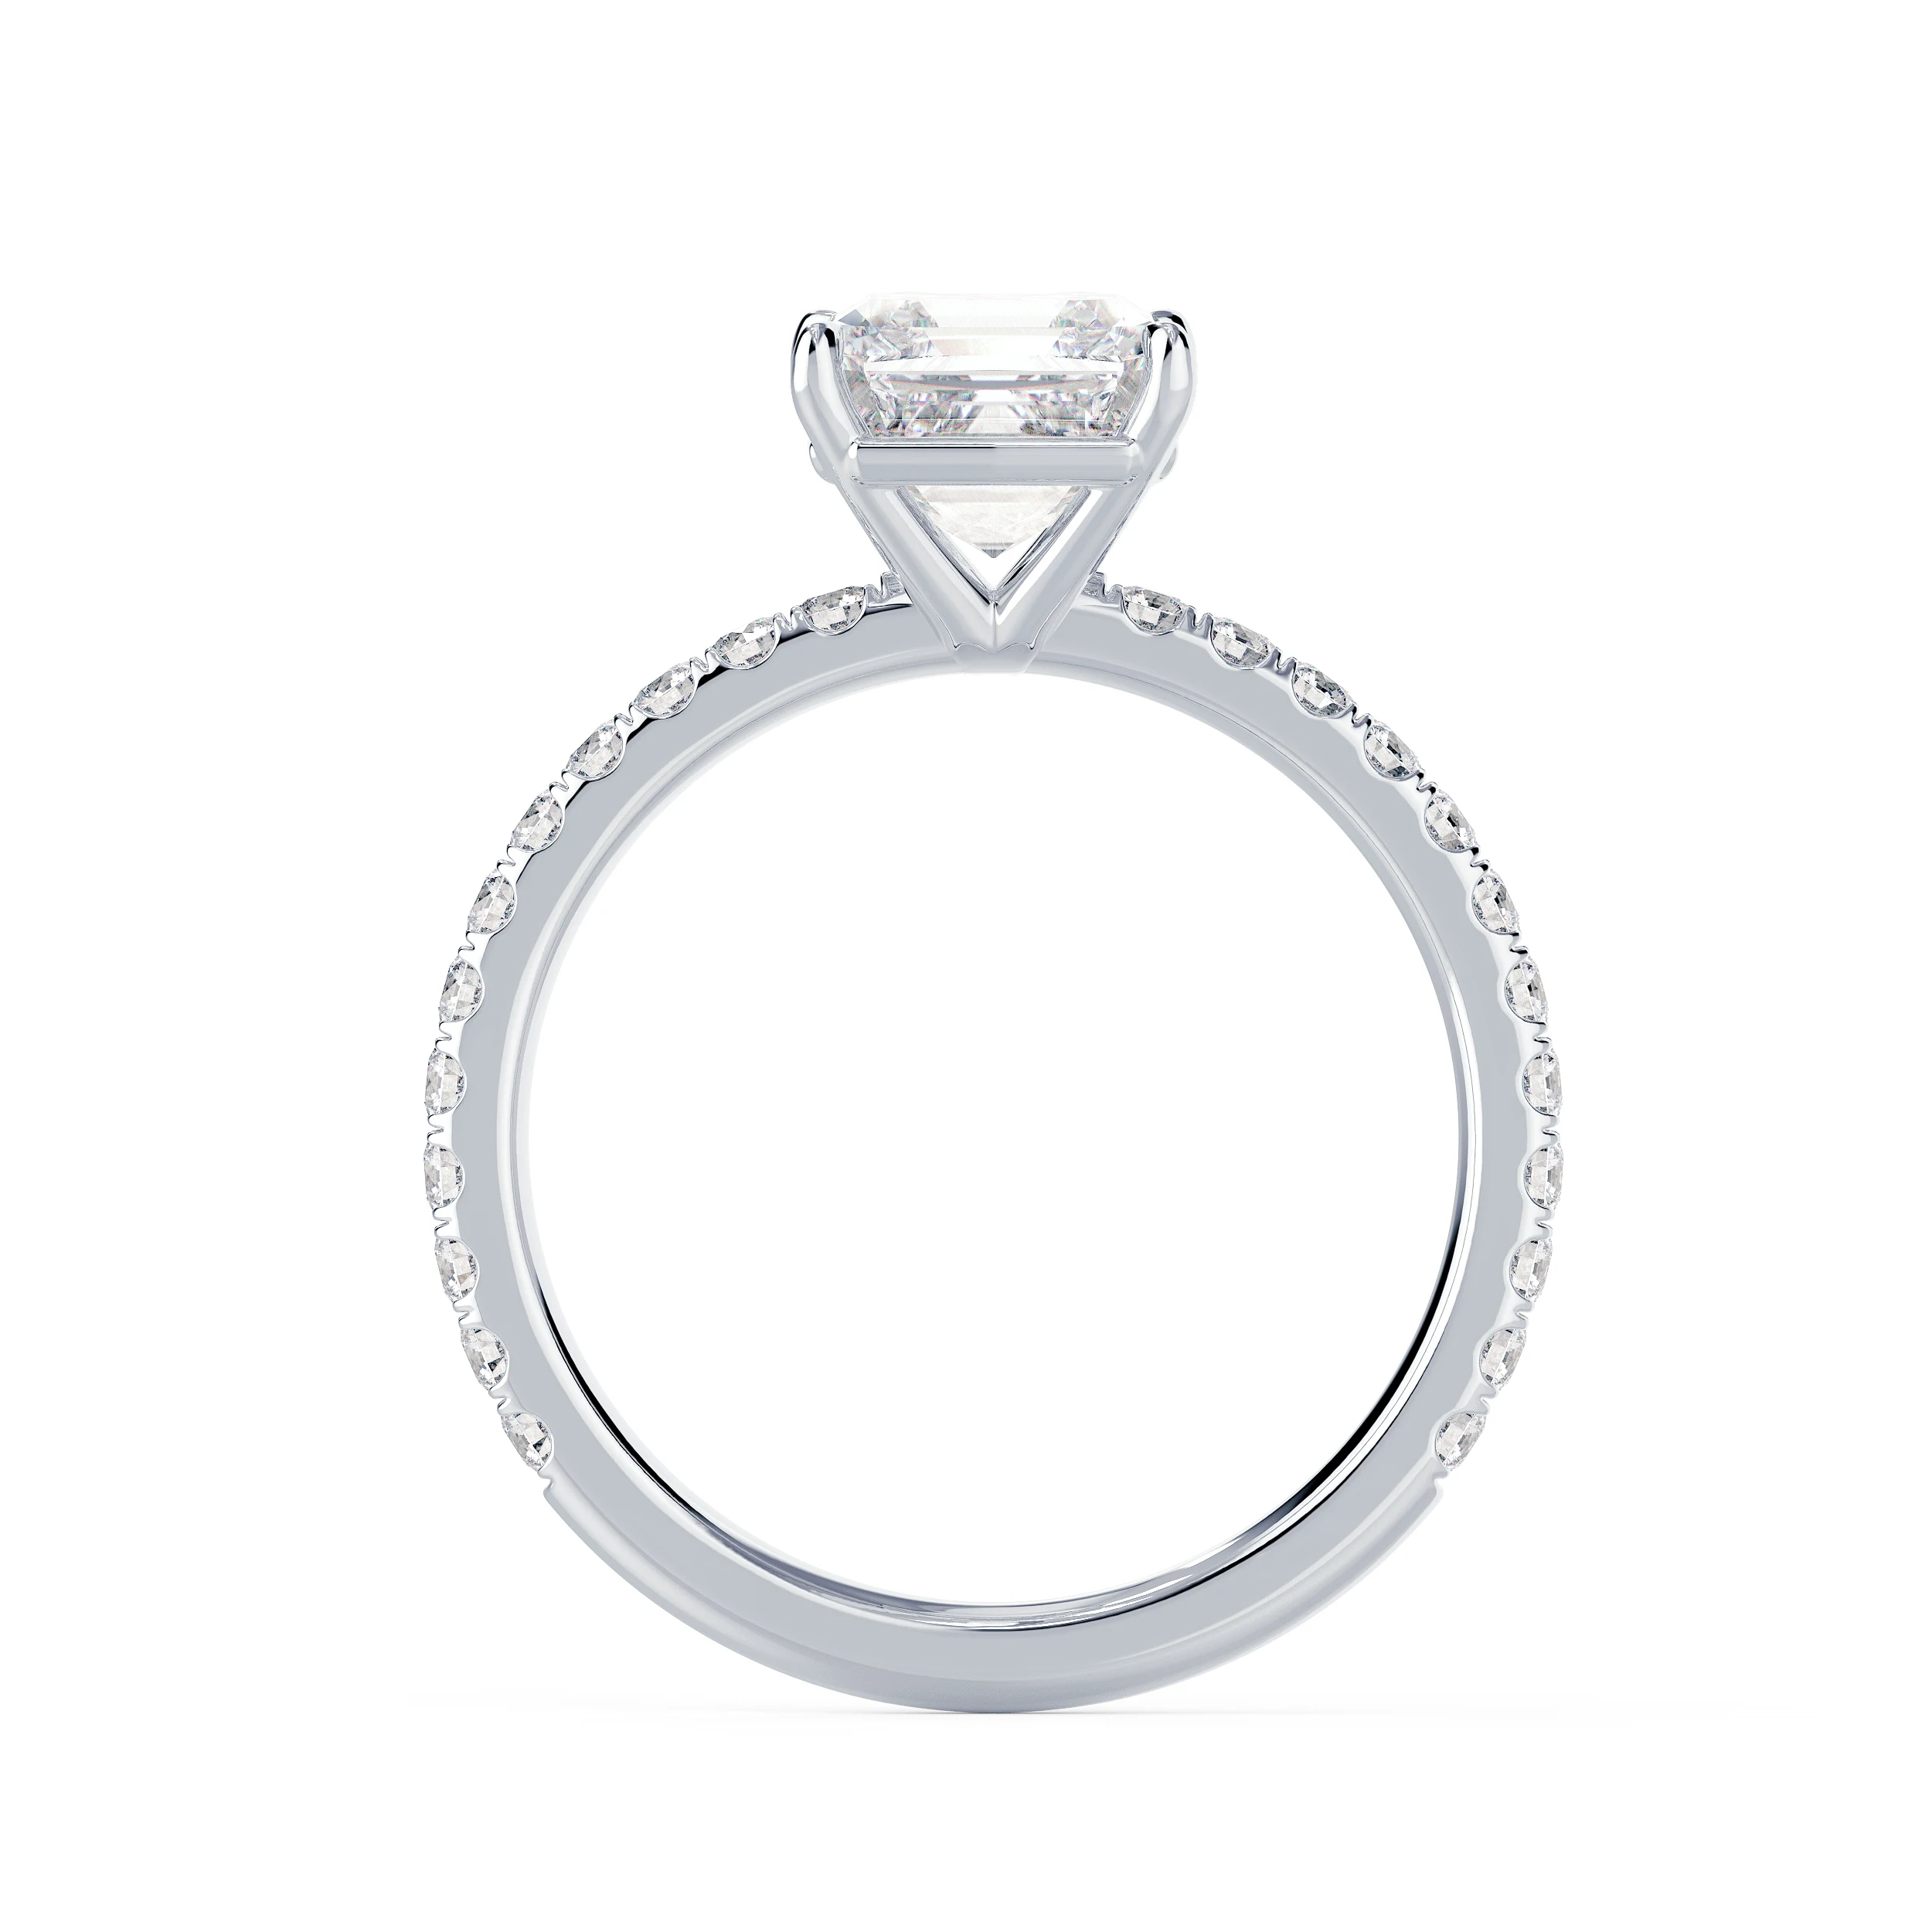 Man Made Diamonds set in White Gold Asscher Petite Four Prong Pavé Diamond Engagement Ring (Profile View)